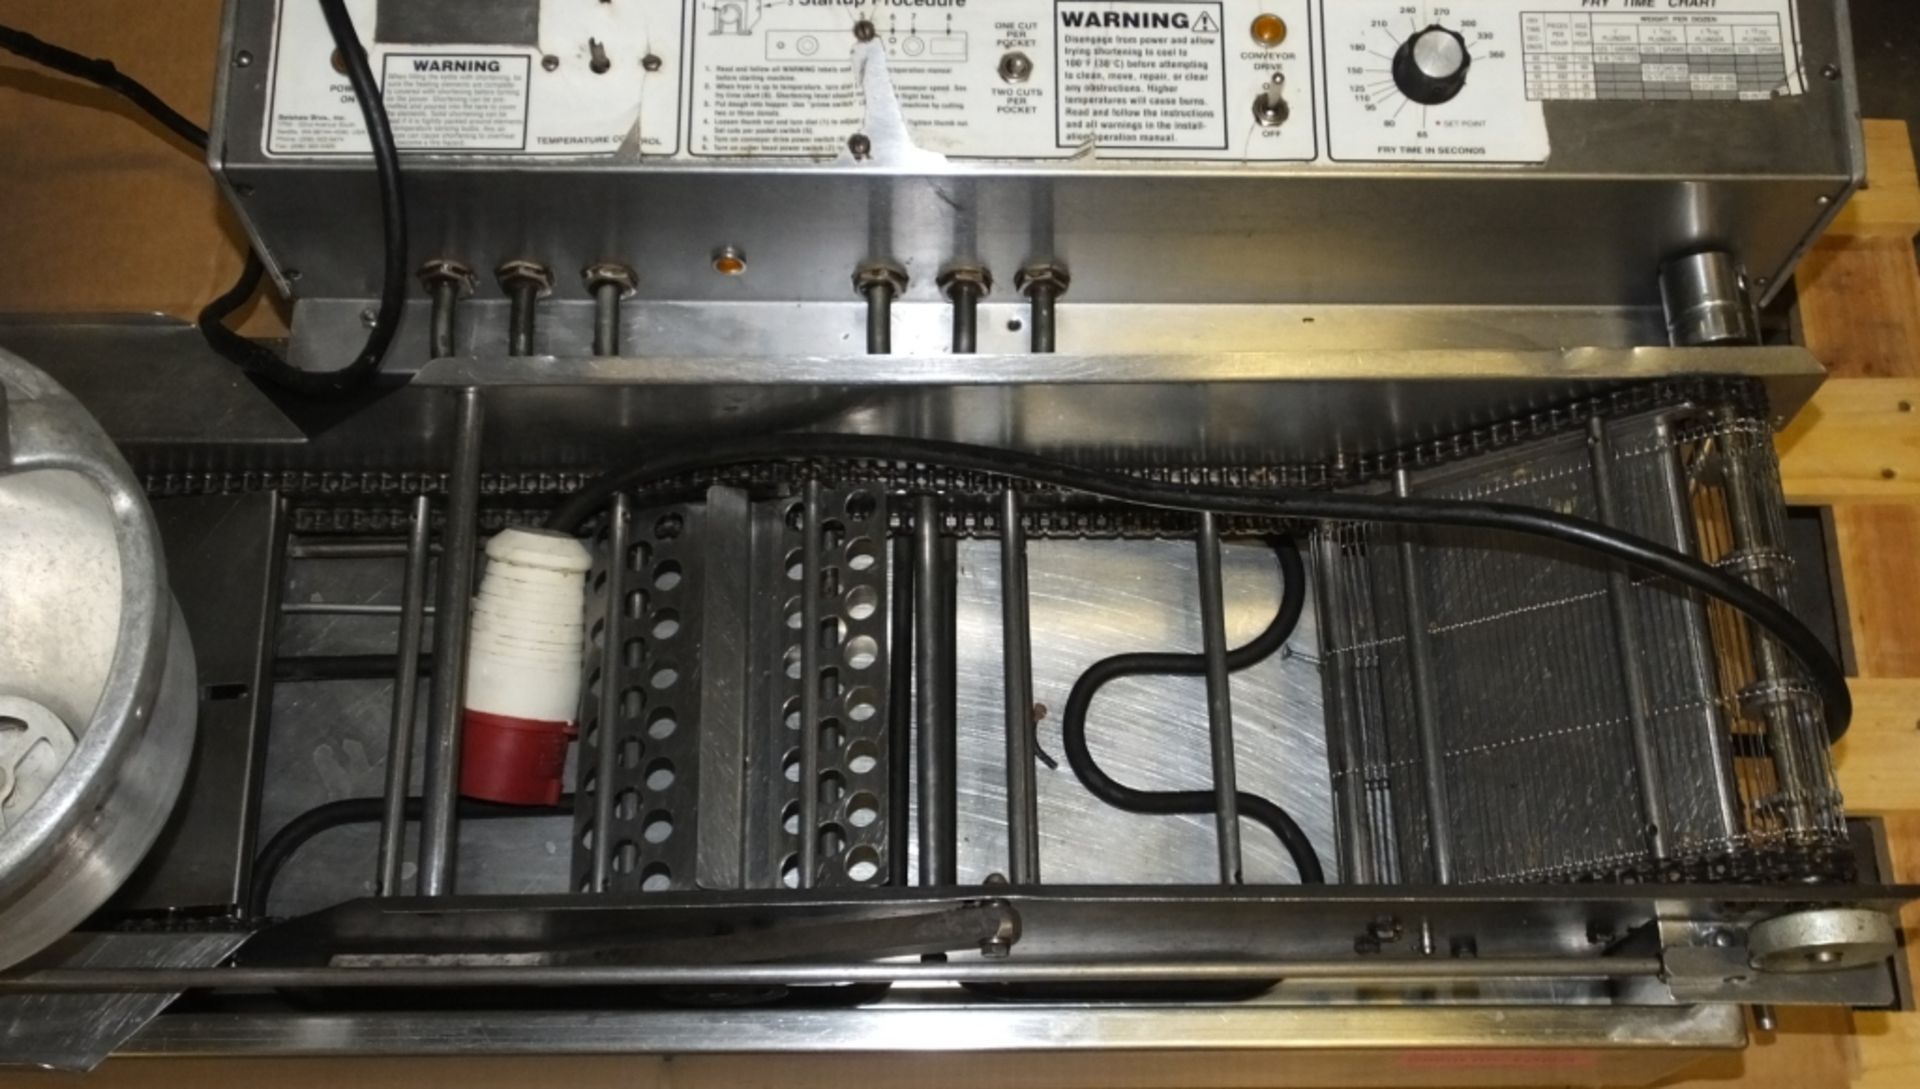 Conveyor Donut Frying Machine - Image 2 of 3